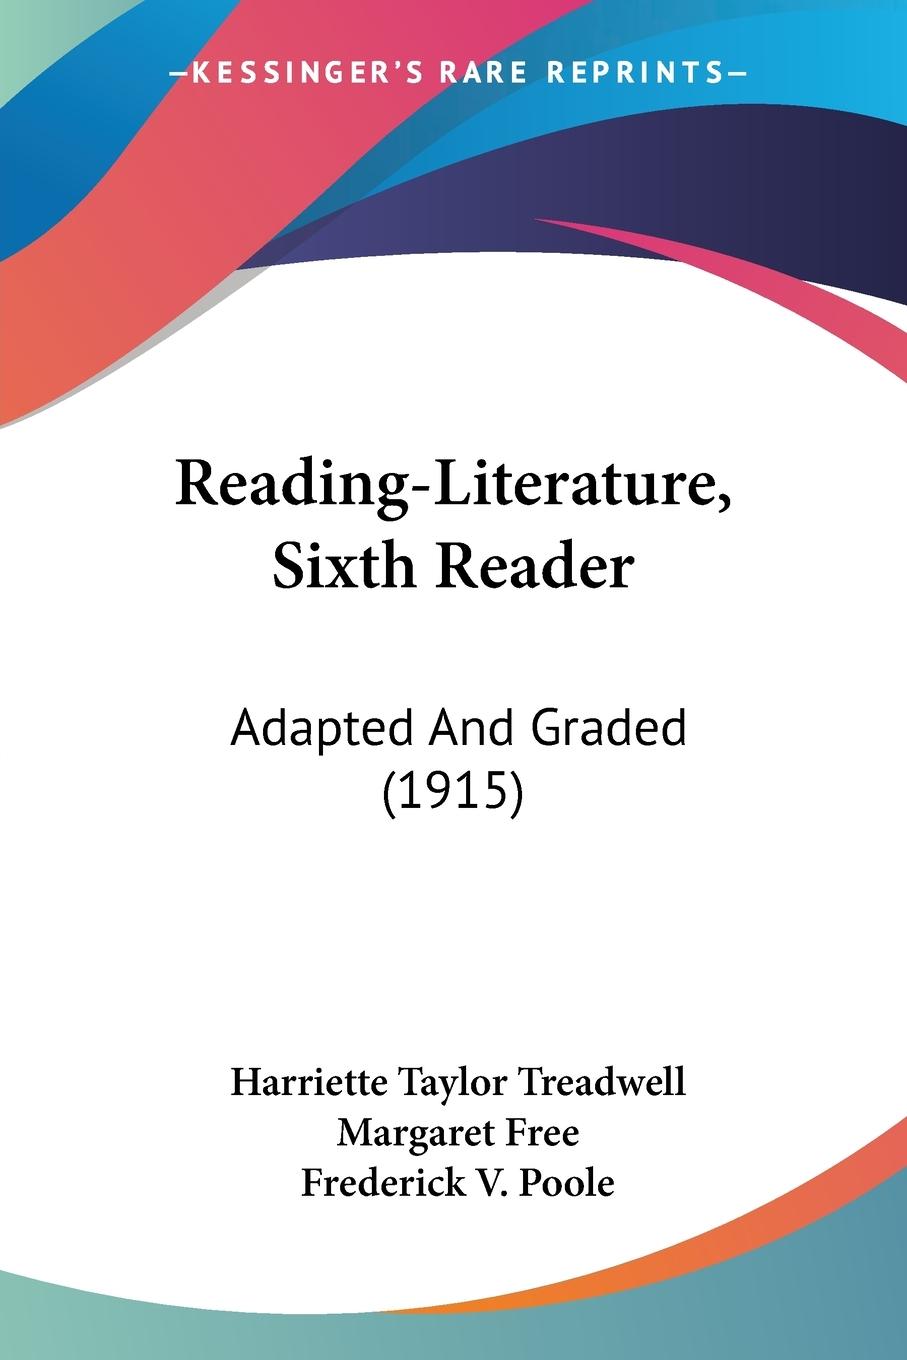 Reading-Literature, Sixth Reader - Treadwell, Harriette Taylor Free, Margaret